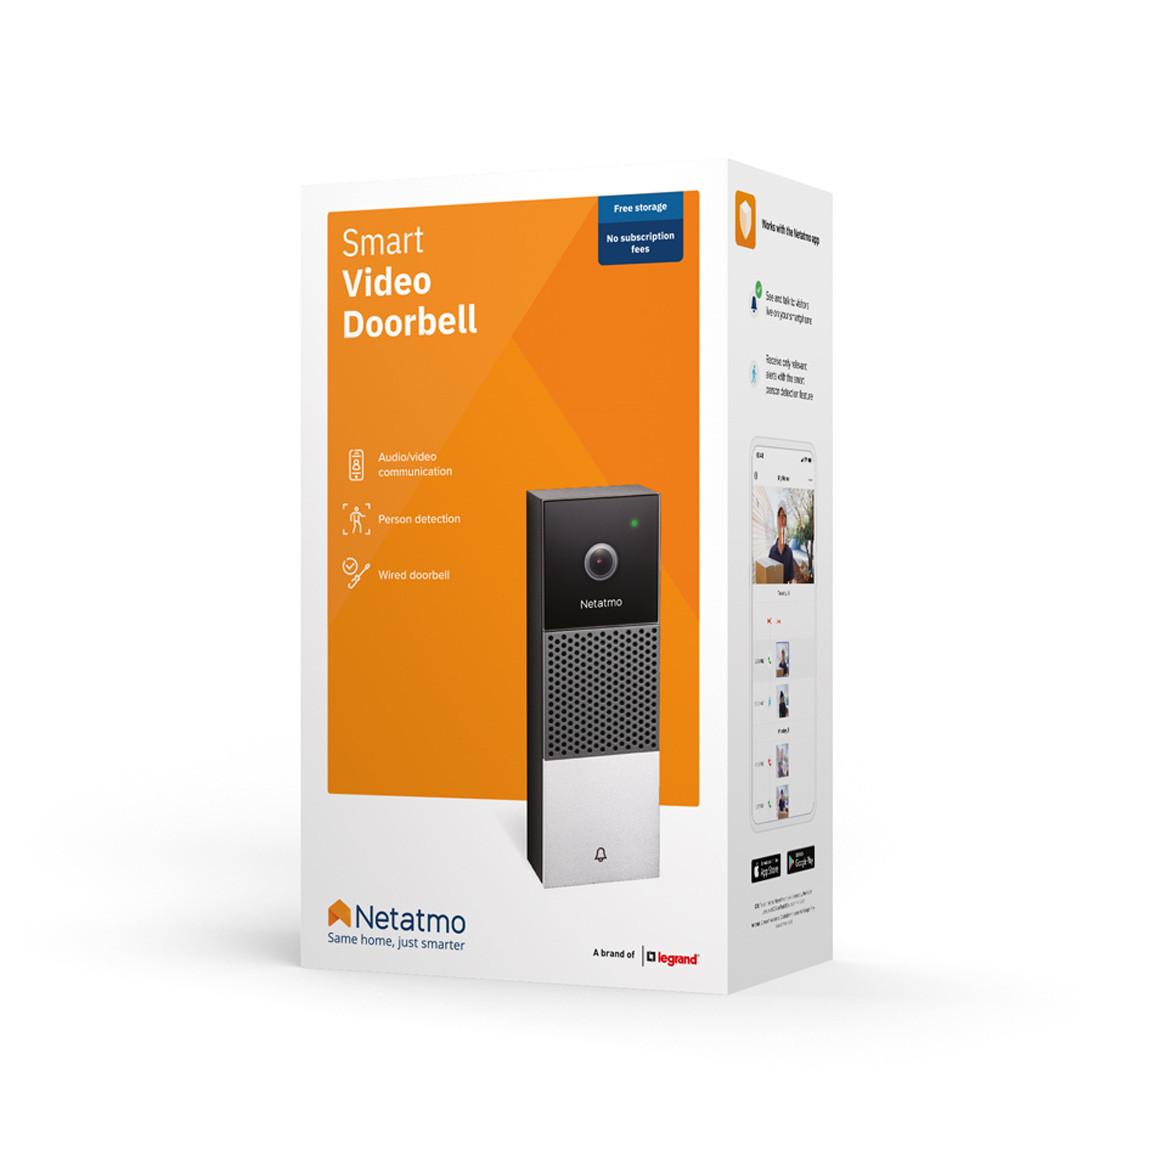 Netatmo Smart Doorlock + Smart Key 3er-Set + Video-Türklingel + Außenkamera